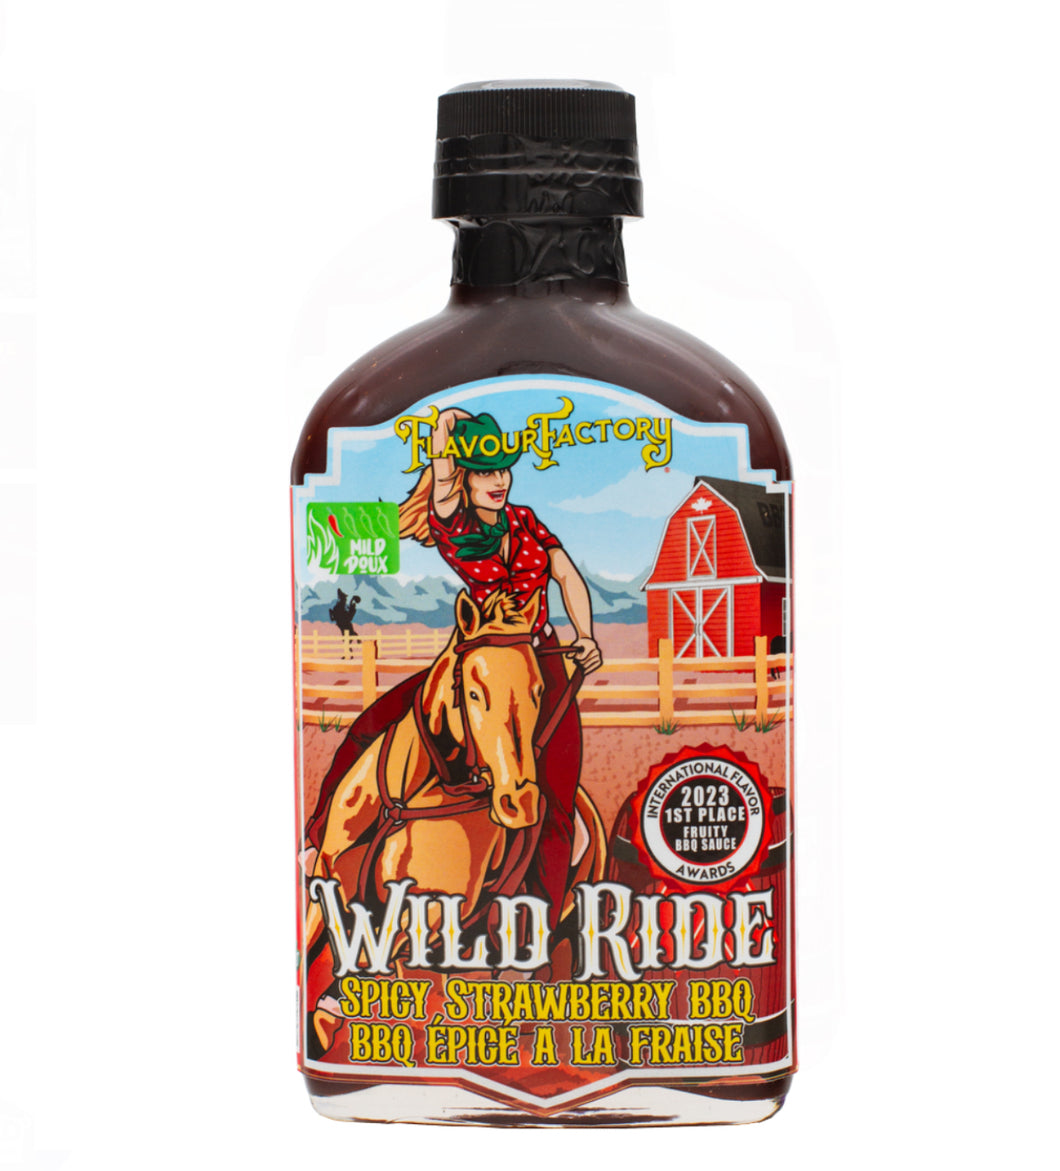 Flavour Factory “Wild Ride” Spicy Strawberry BBQ Sauce